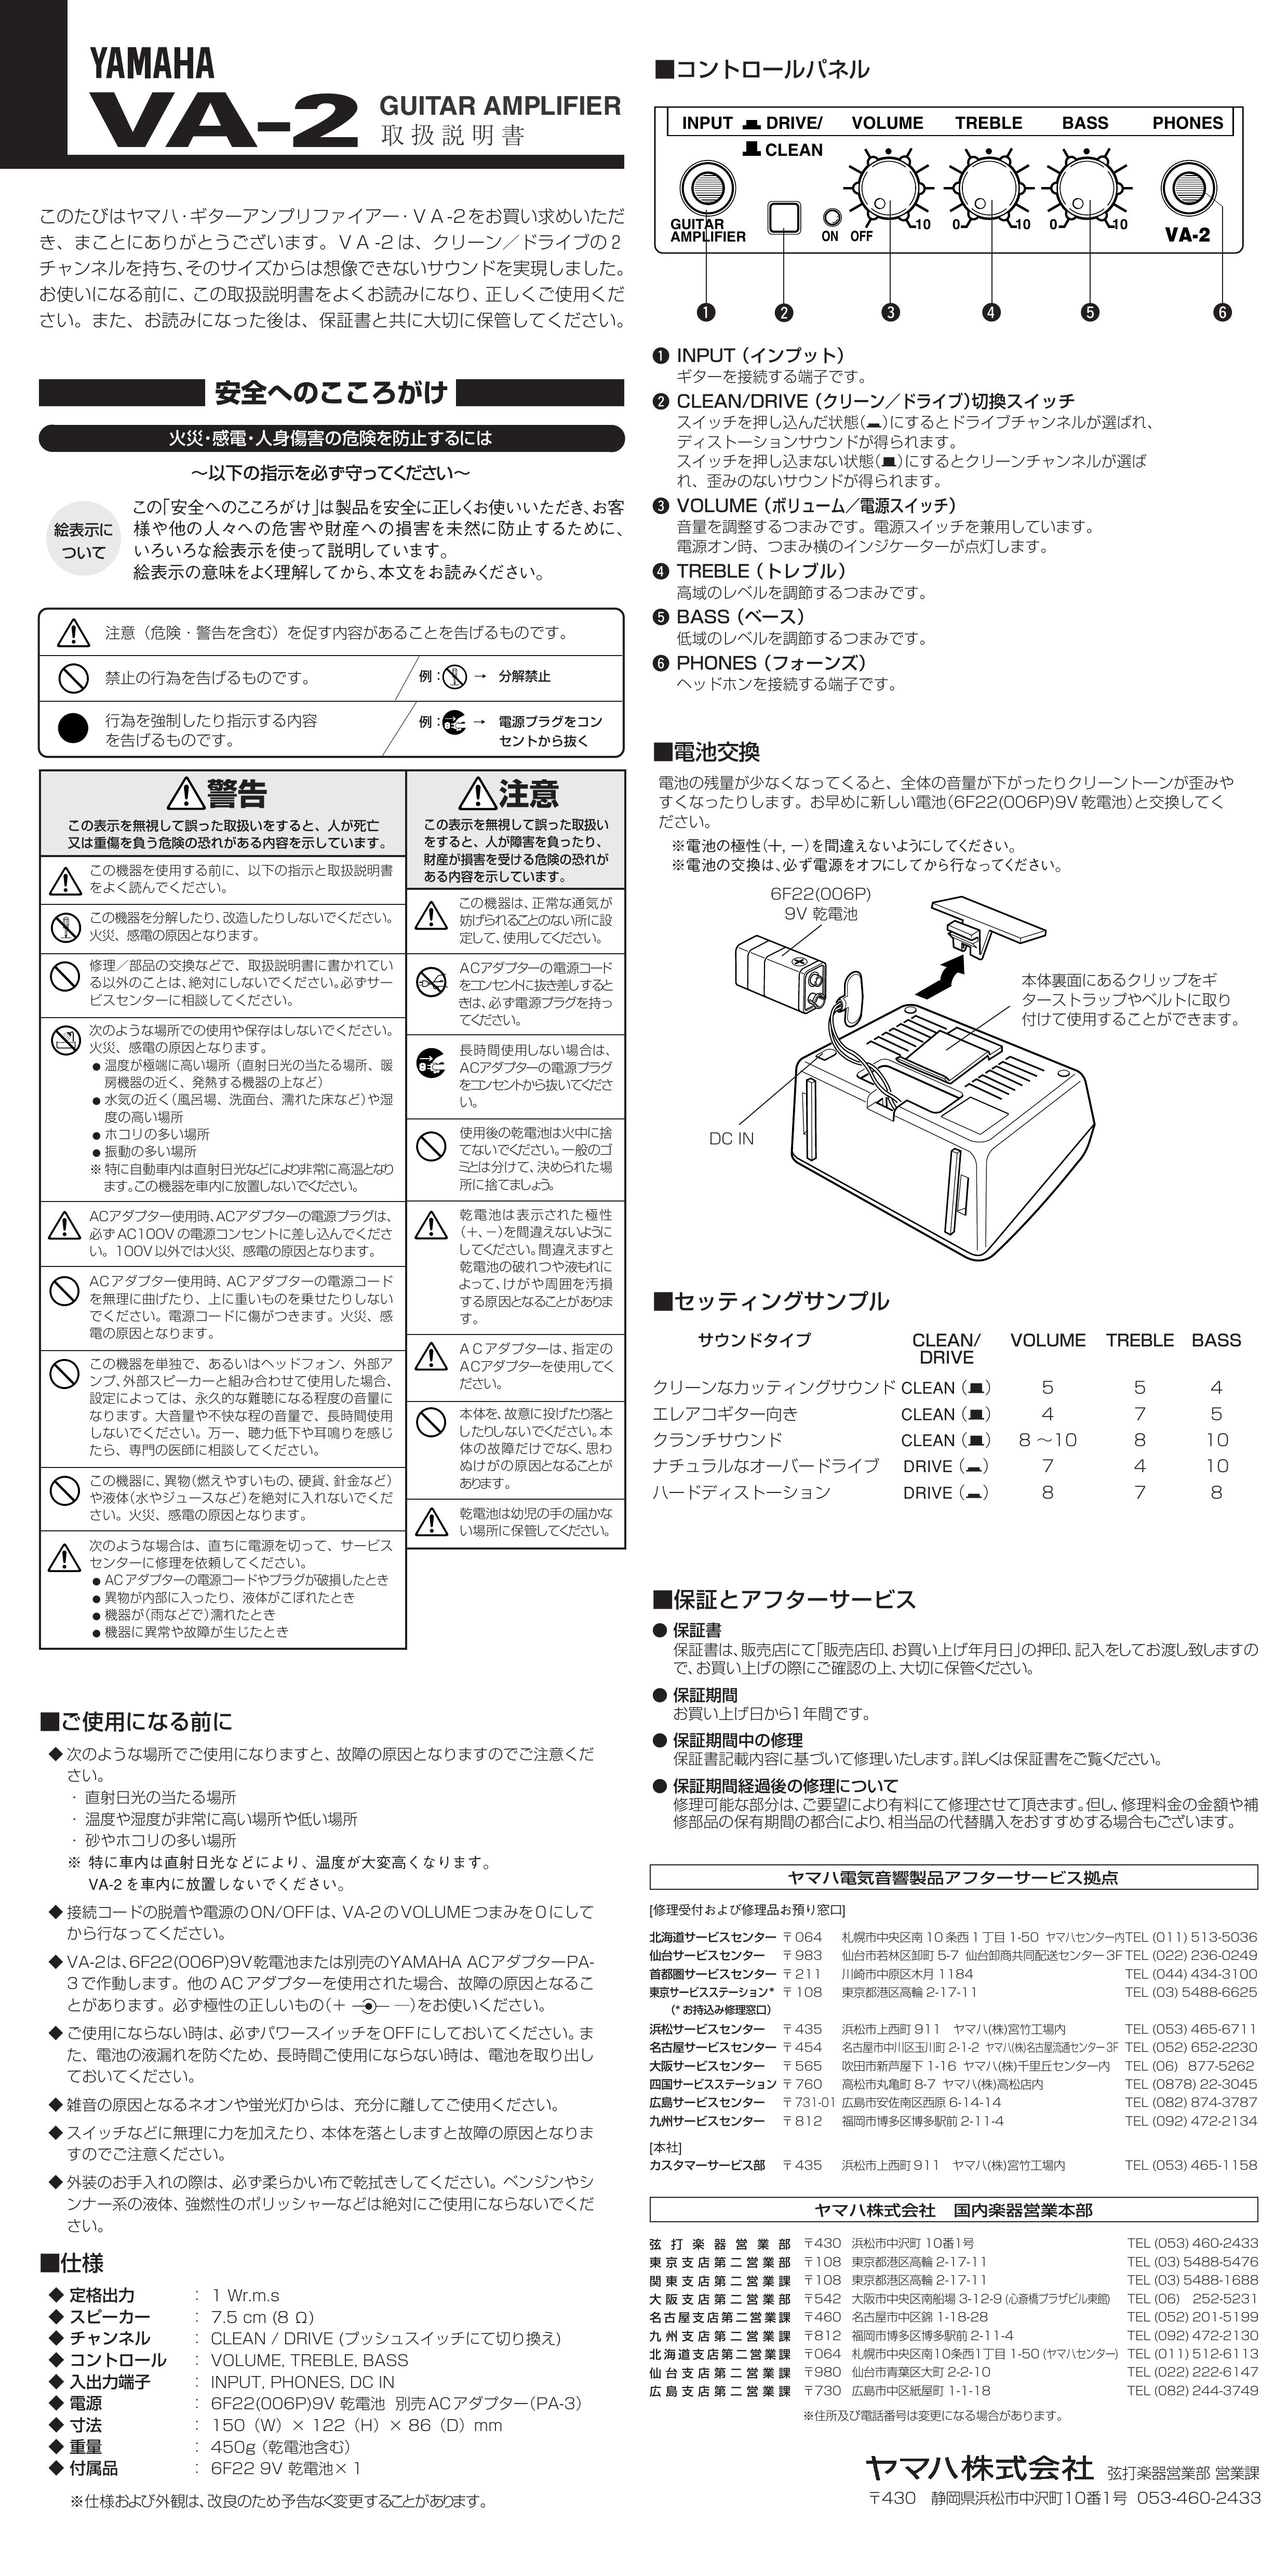 Yamaha VA2 Musical Instrument Amplifier User Manual